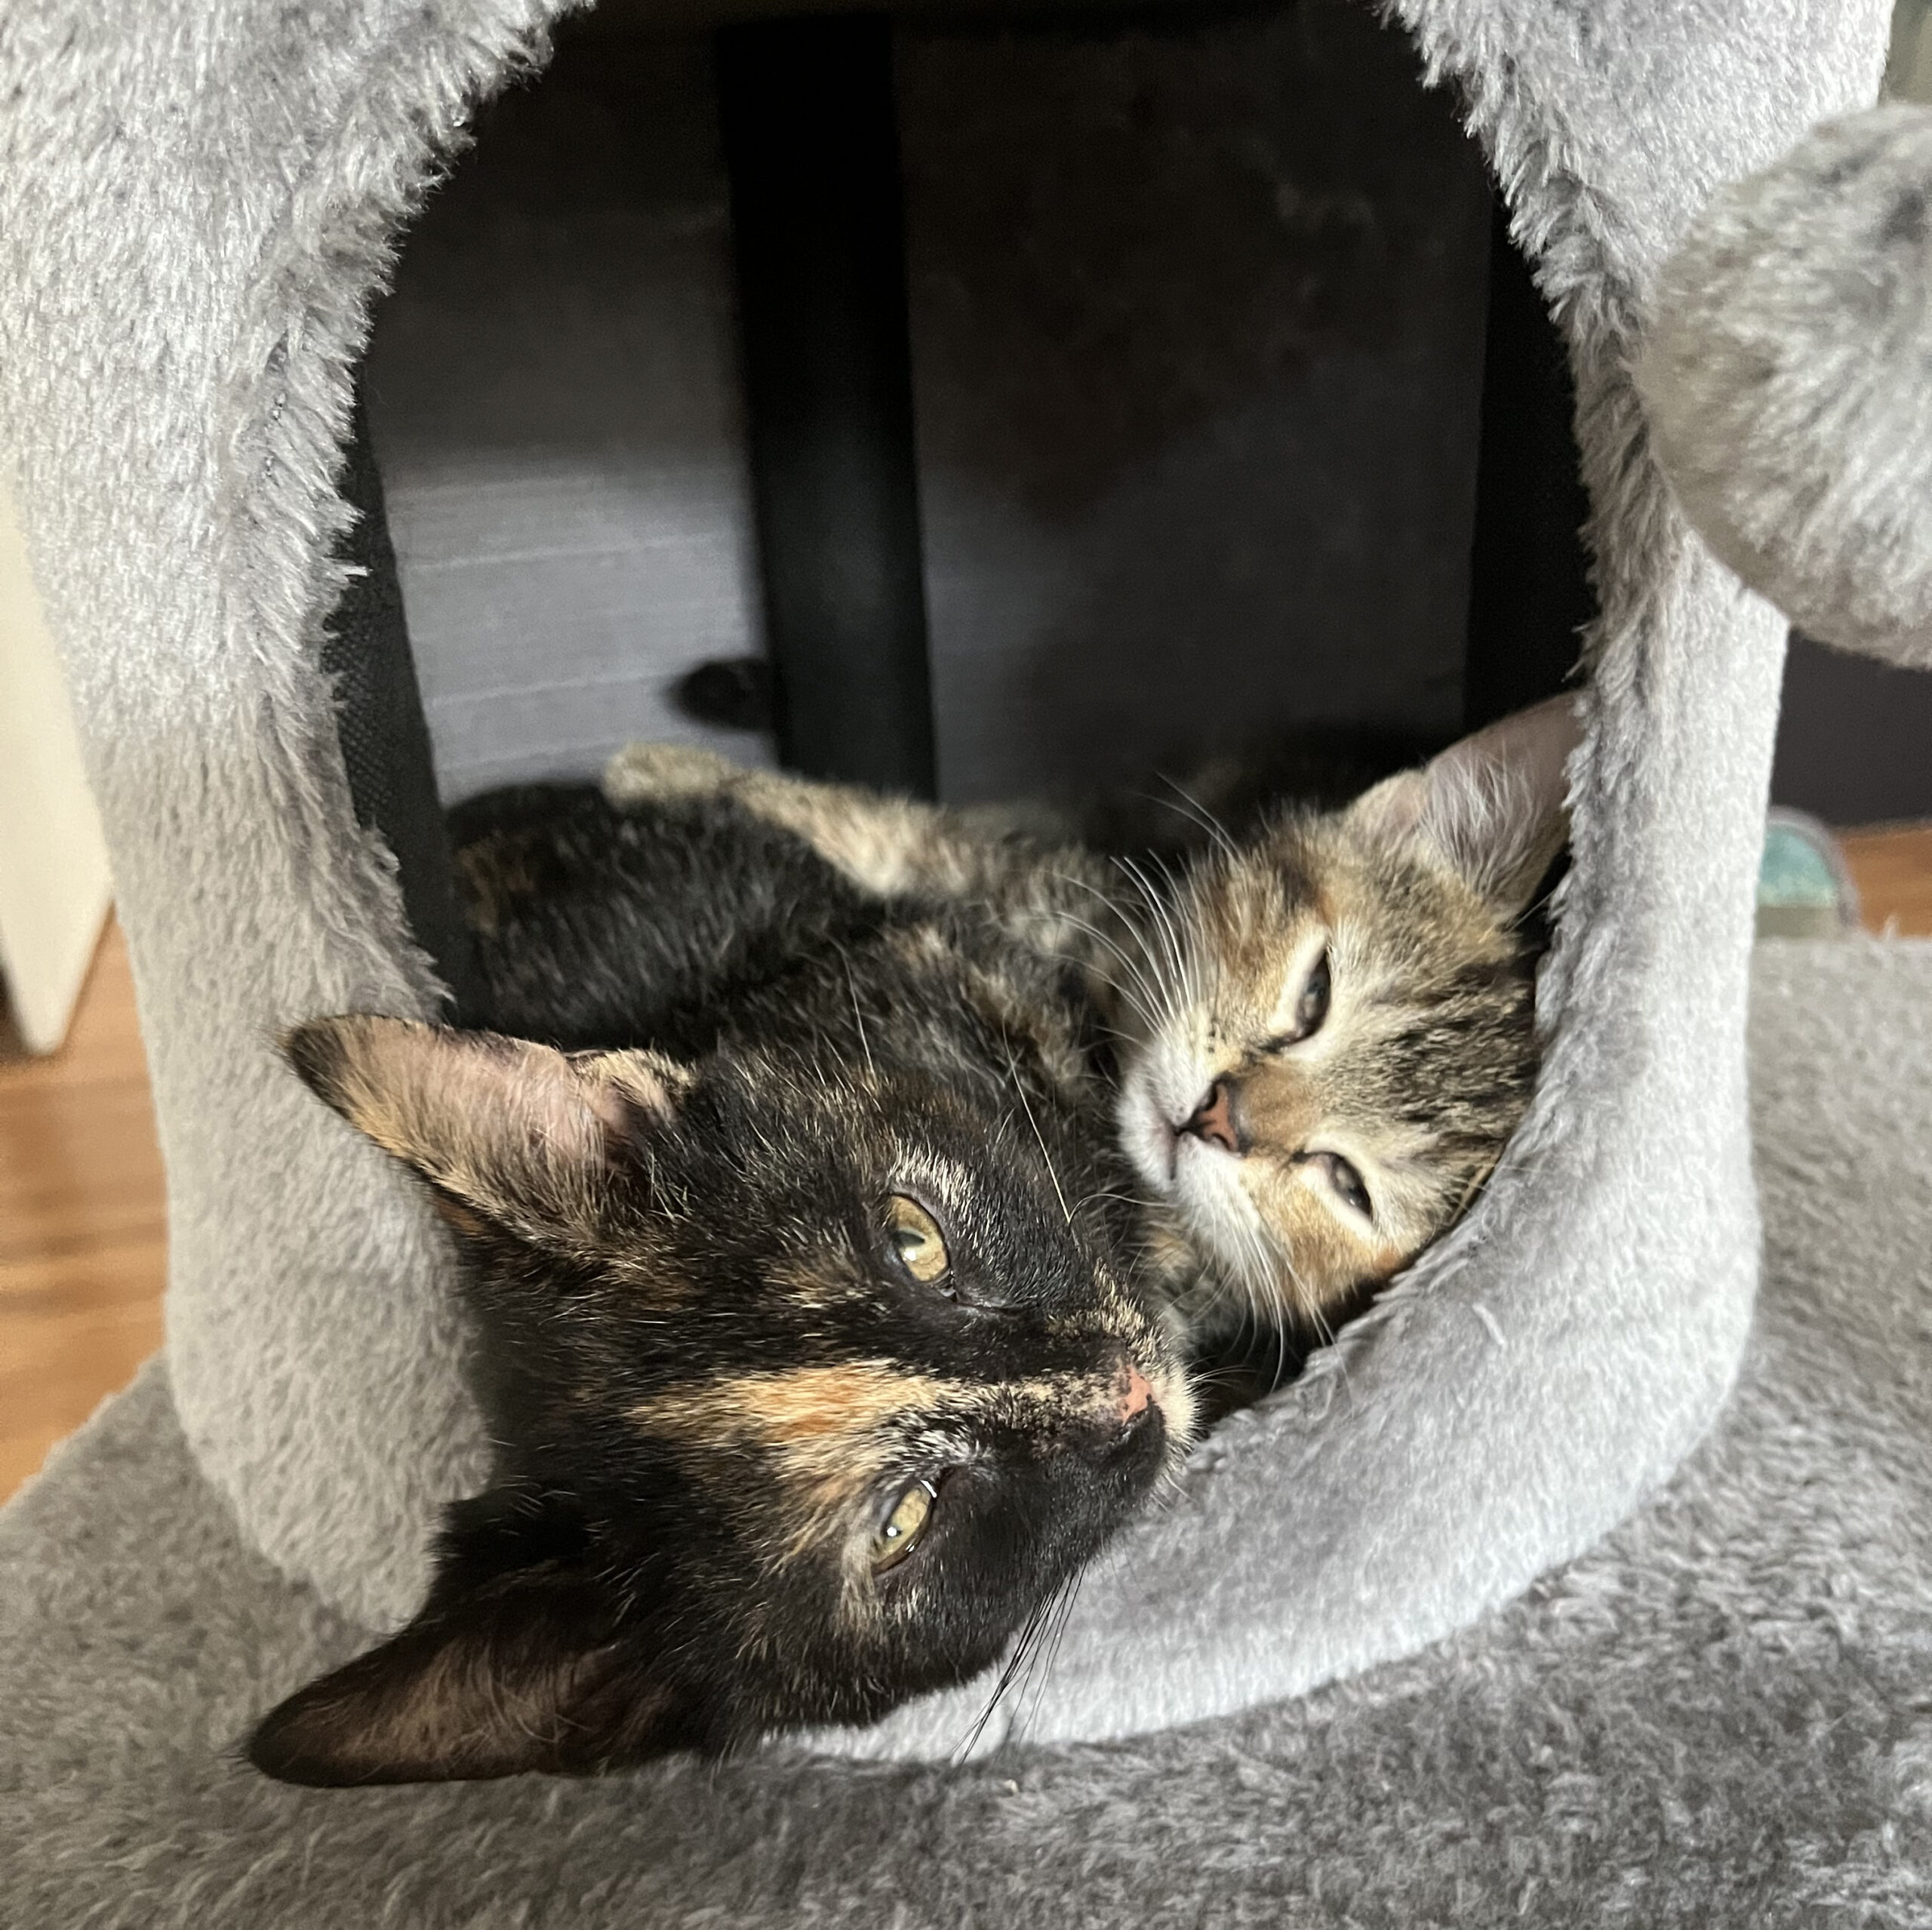 Two kitties belonging to Amber S.